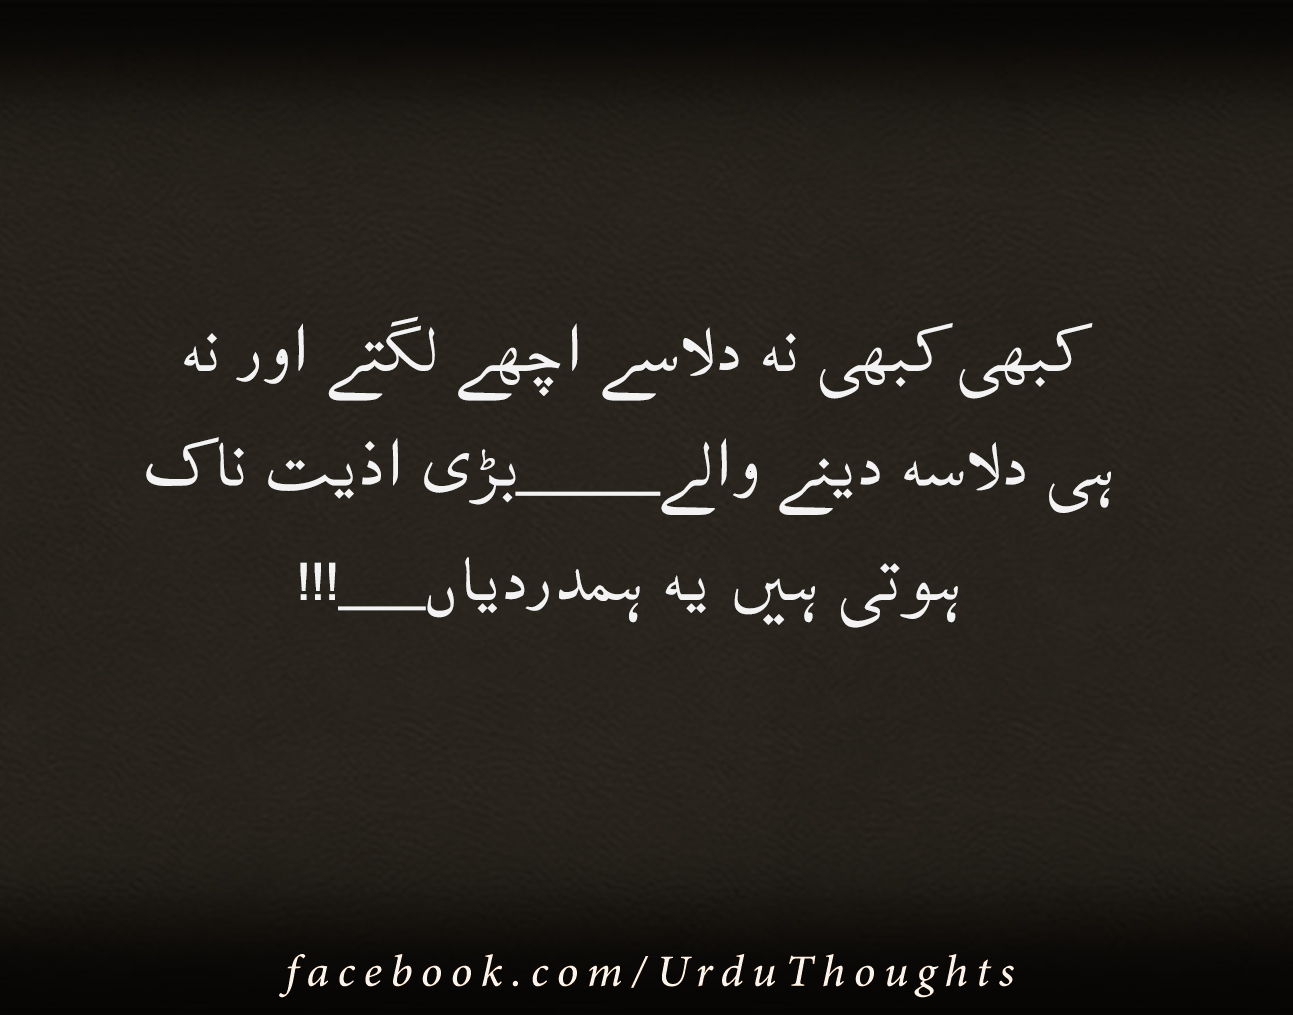  Urdu  Quotes  About Life  Urdu  Achi Batain Urdu  Thoughts